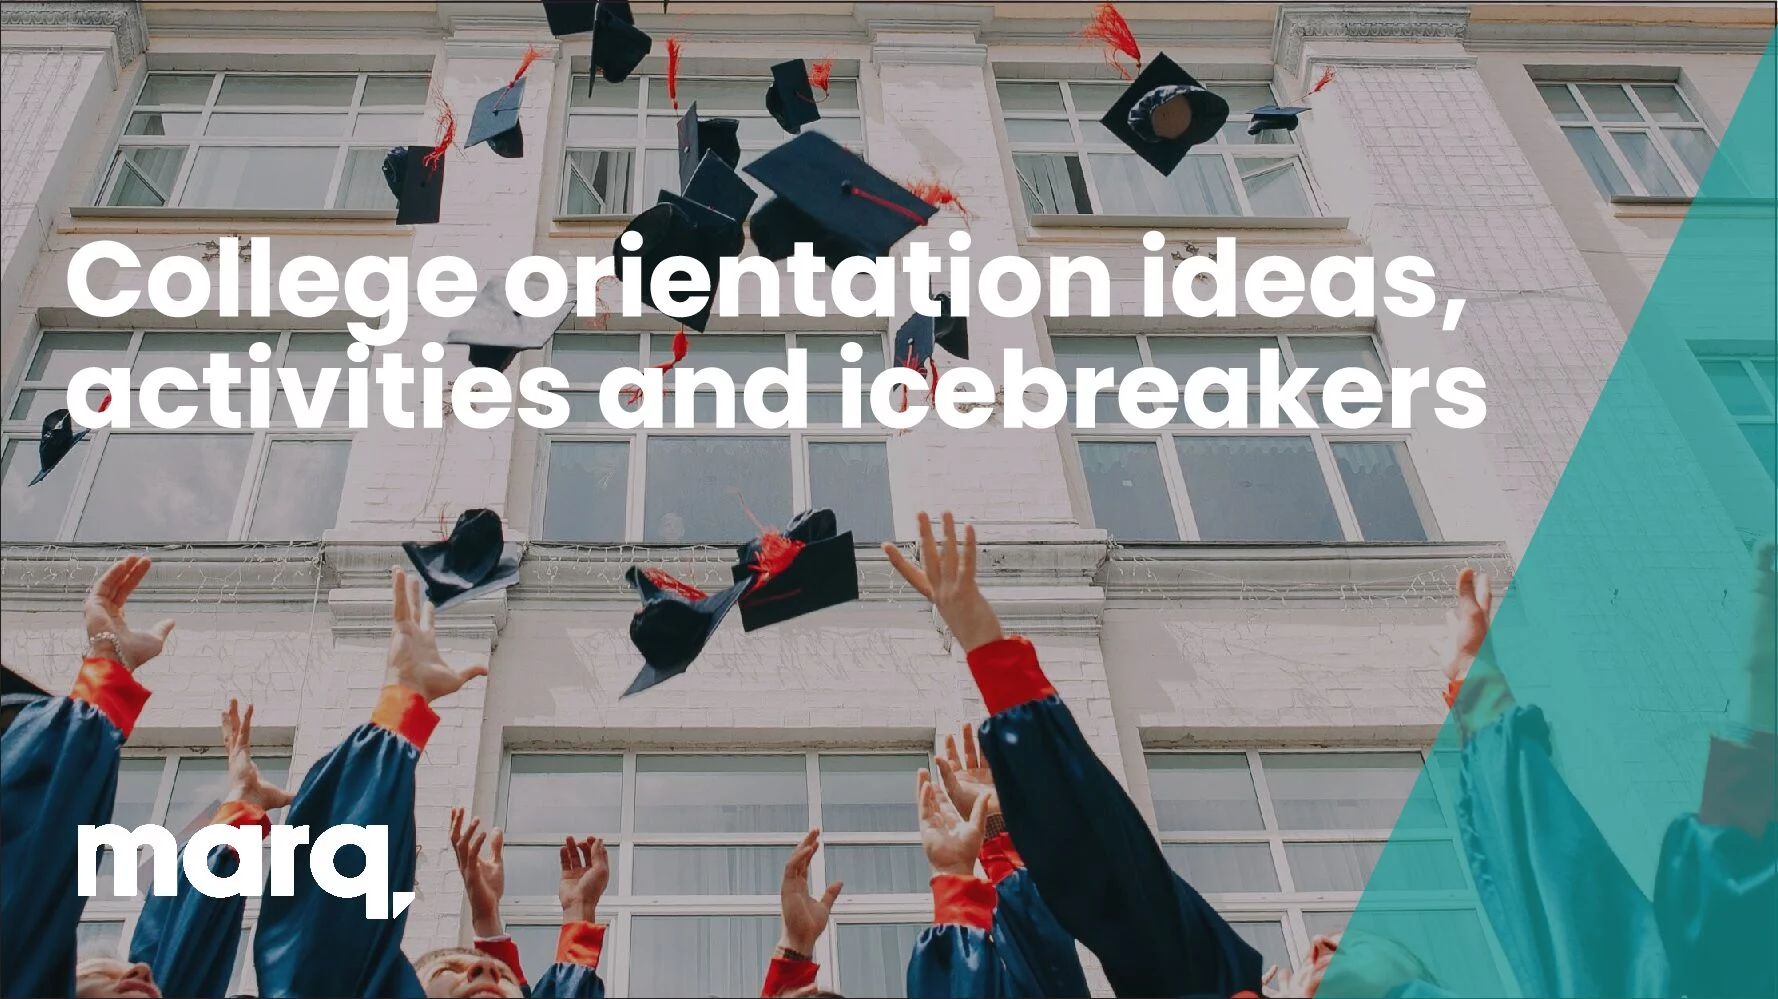 College orientation ideas, activities and icebreakers